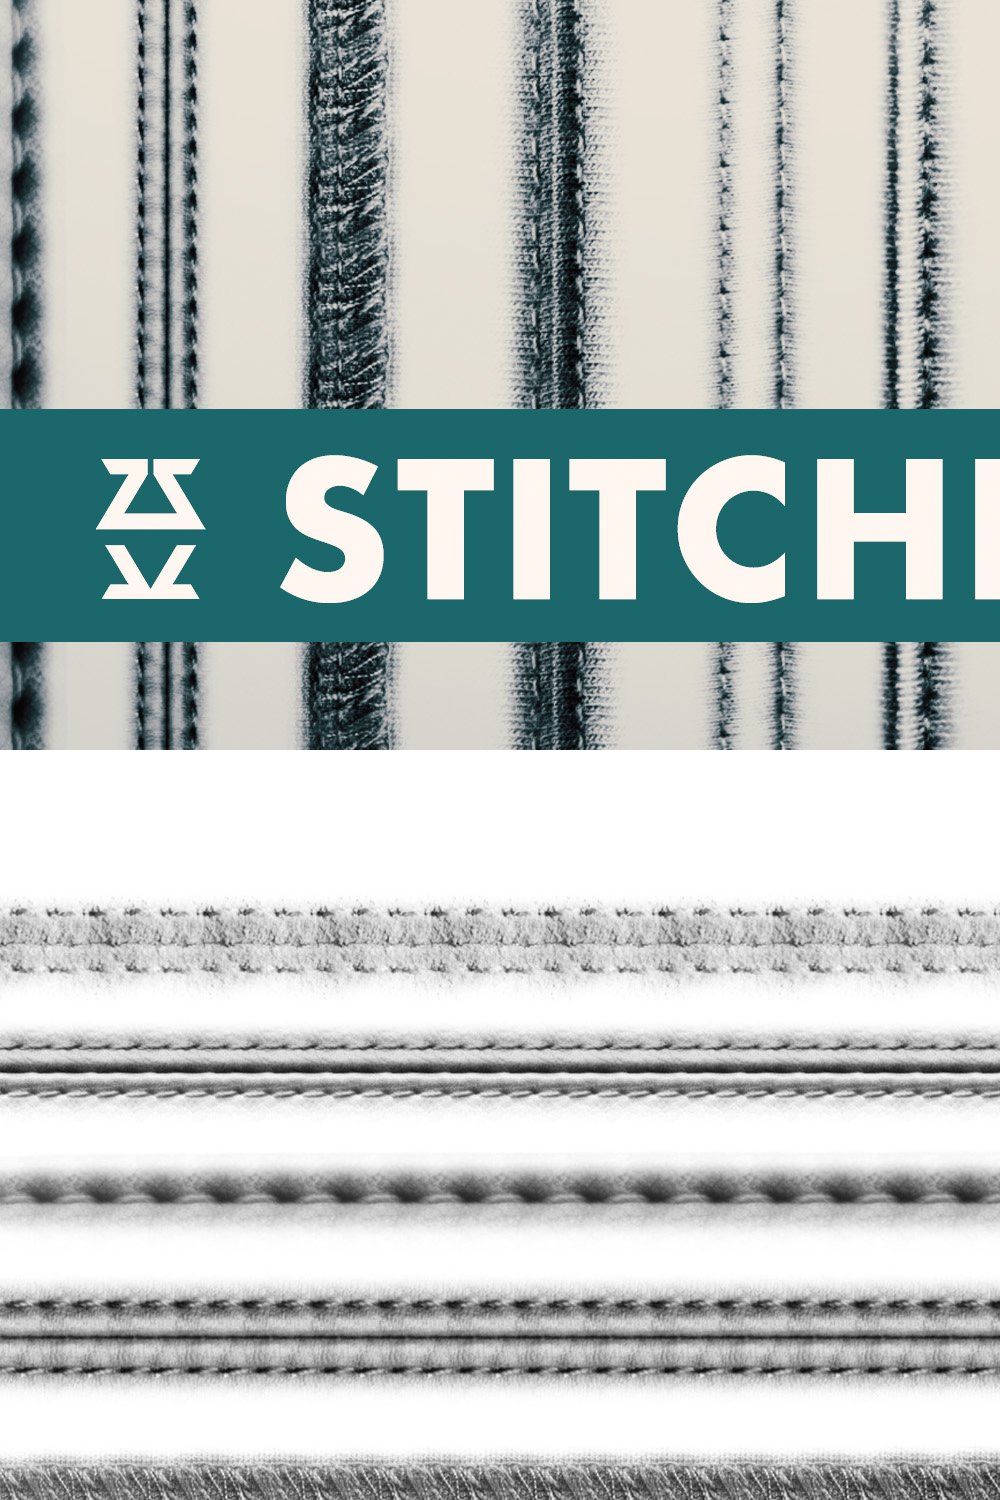 Stitches Brush Set pinterest preview image.